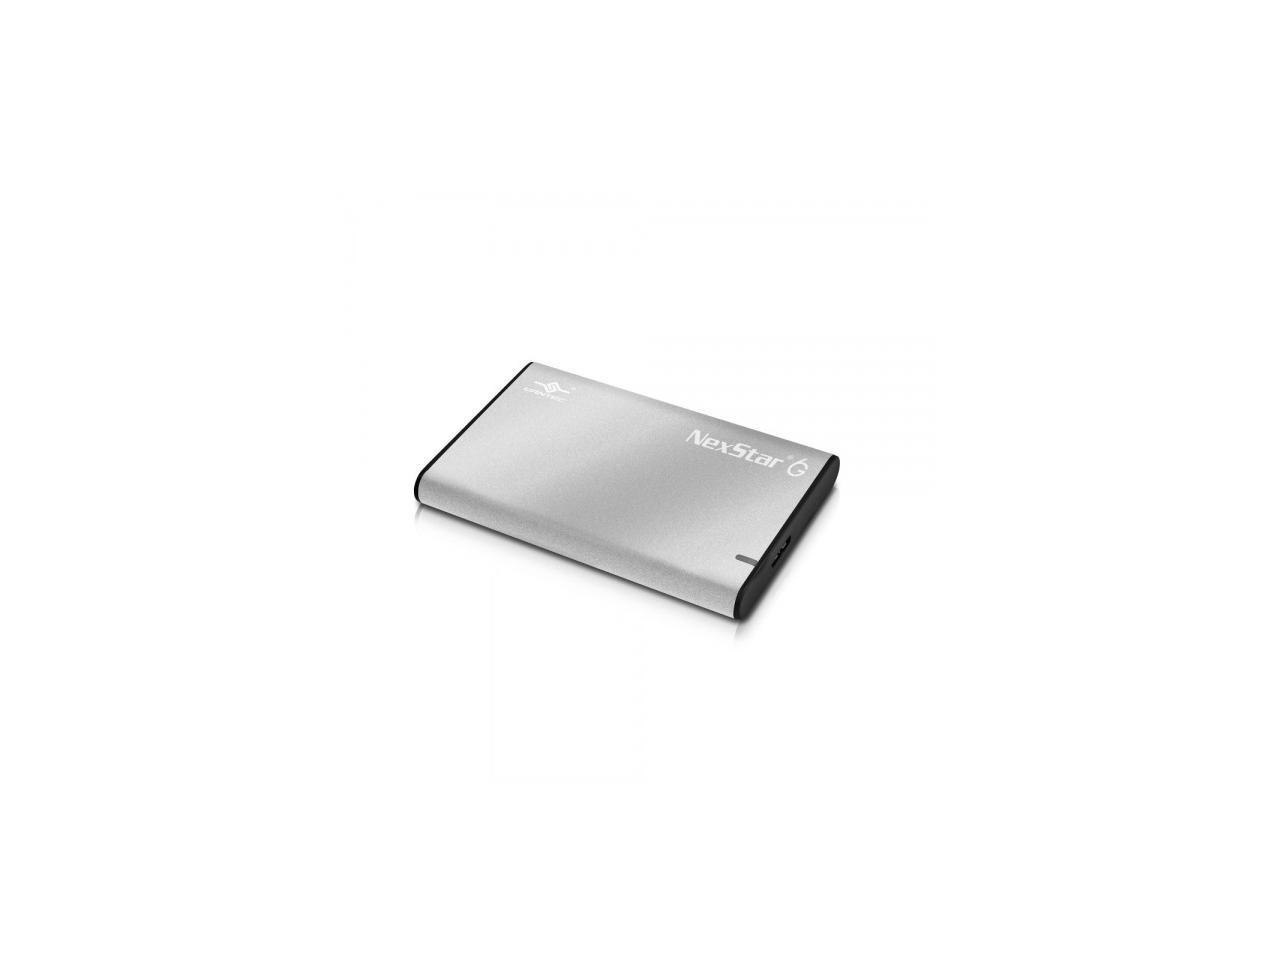 Vantec NexStar 6G 2.5” Sata Iii To Usb 3.2 Gen1 External SSD/HDD Enclosure - Silver NST-268S3-SV